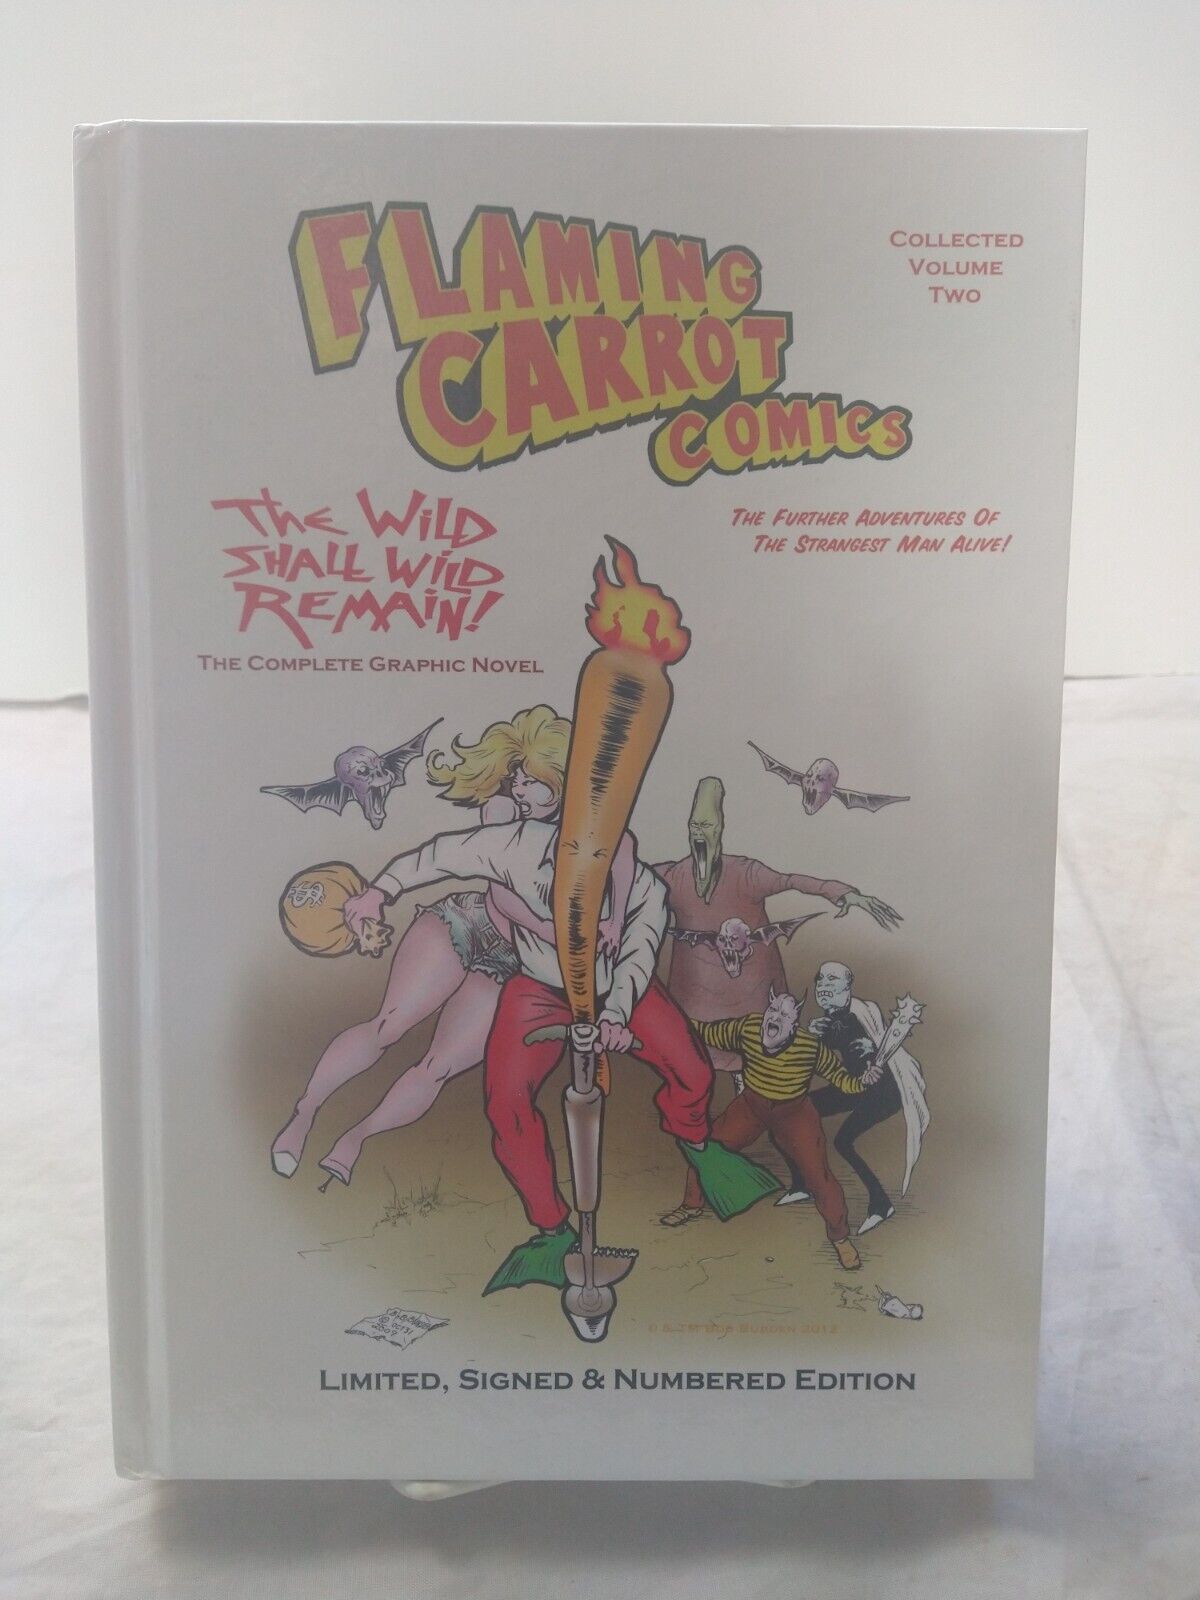 Flaming Carrot Comics Vol 2 The Wild Shall Wild Remain Bob Burden Signed